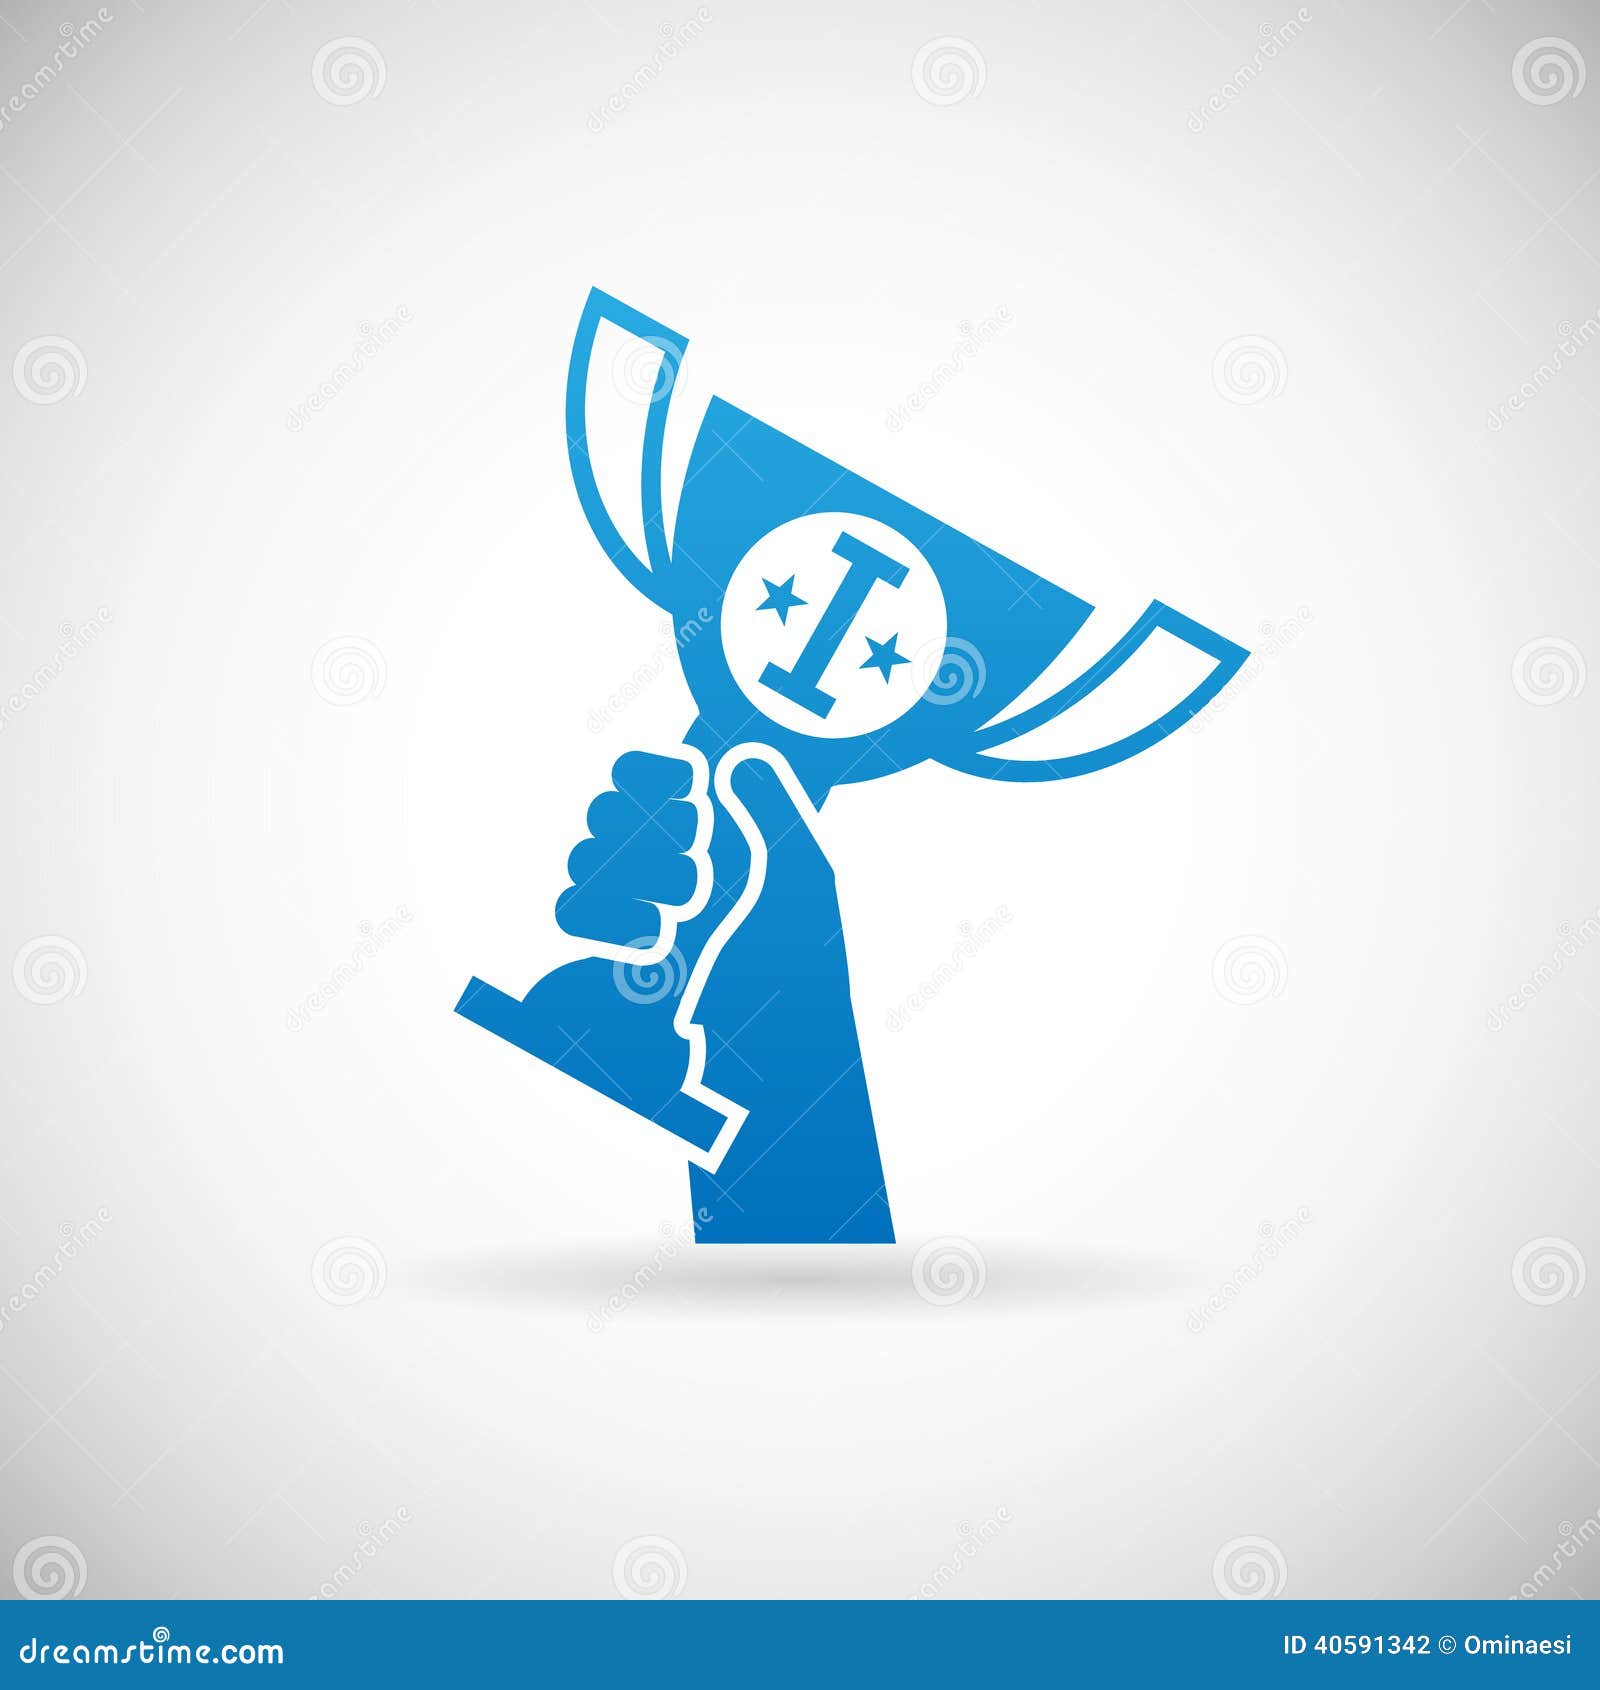 success achievement  hand raises prize award cup icon  template  